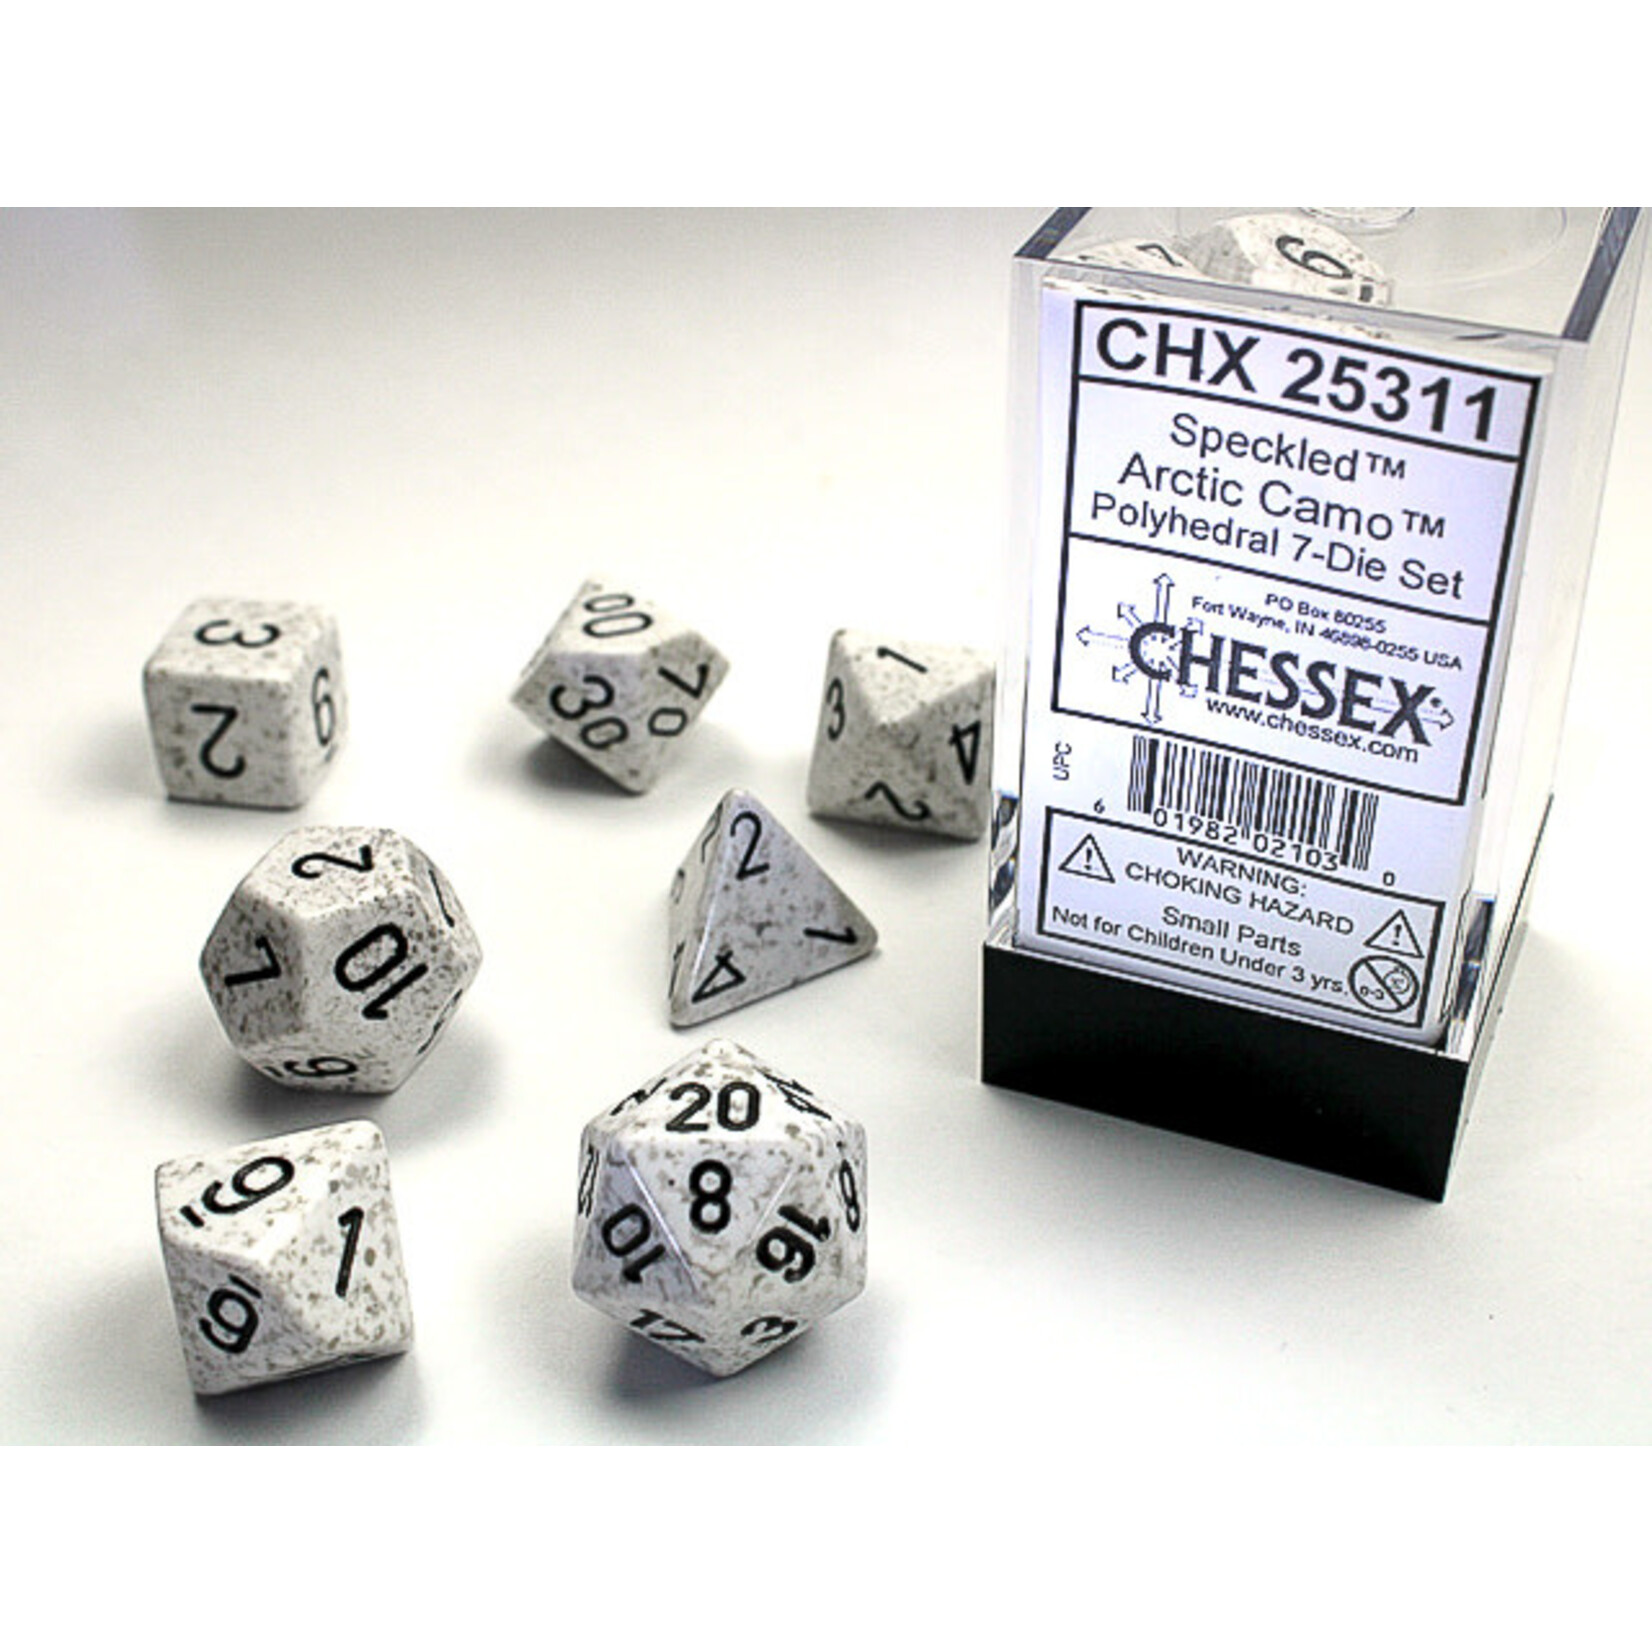 Chessex Dice RPG 25311 7pc Speckled Arctic Camo